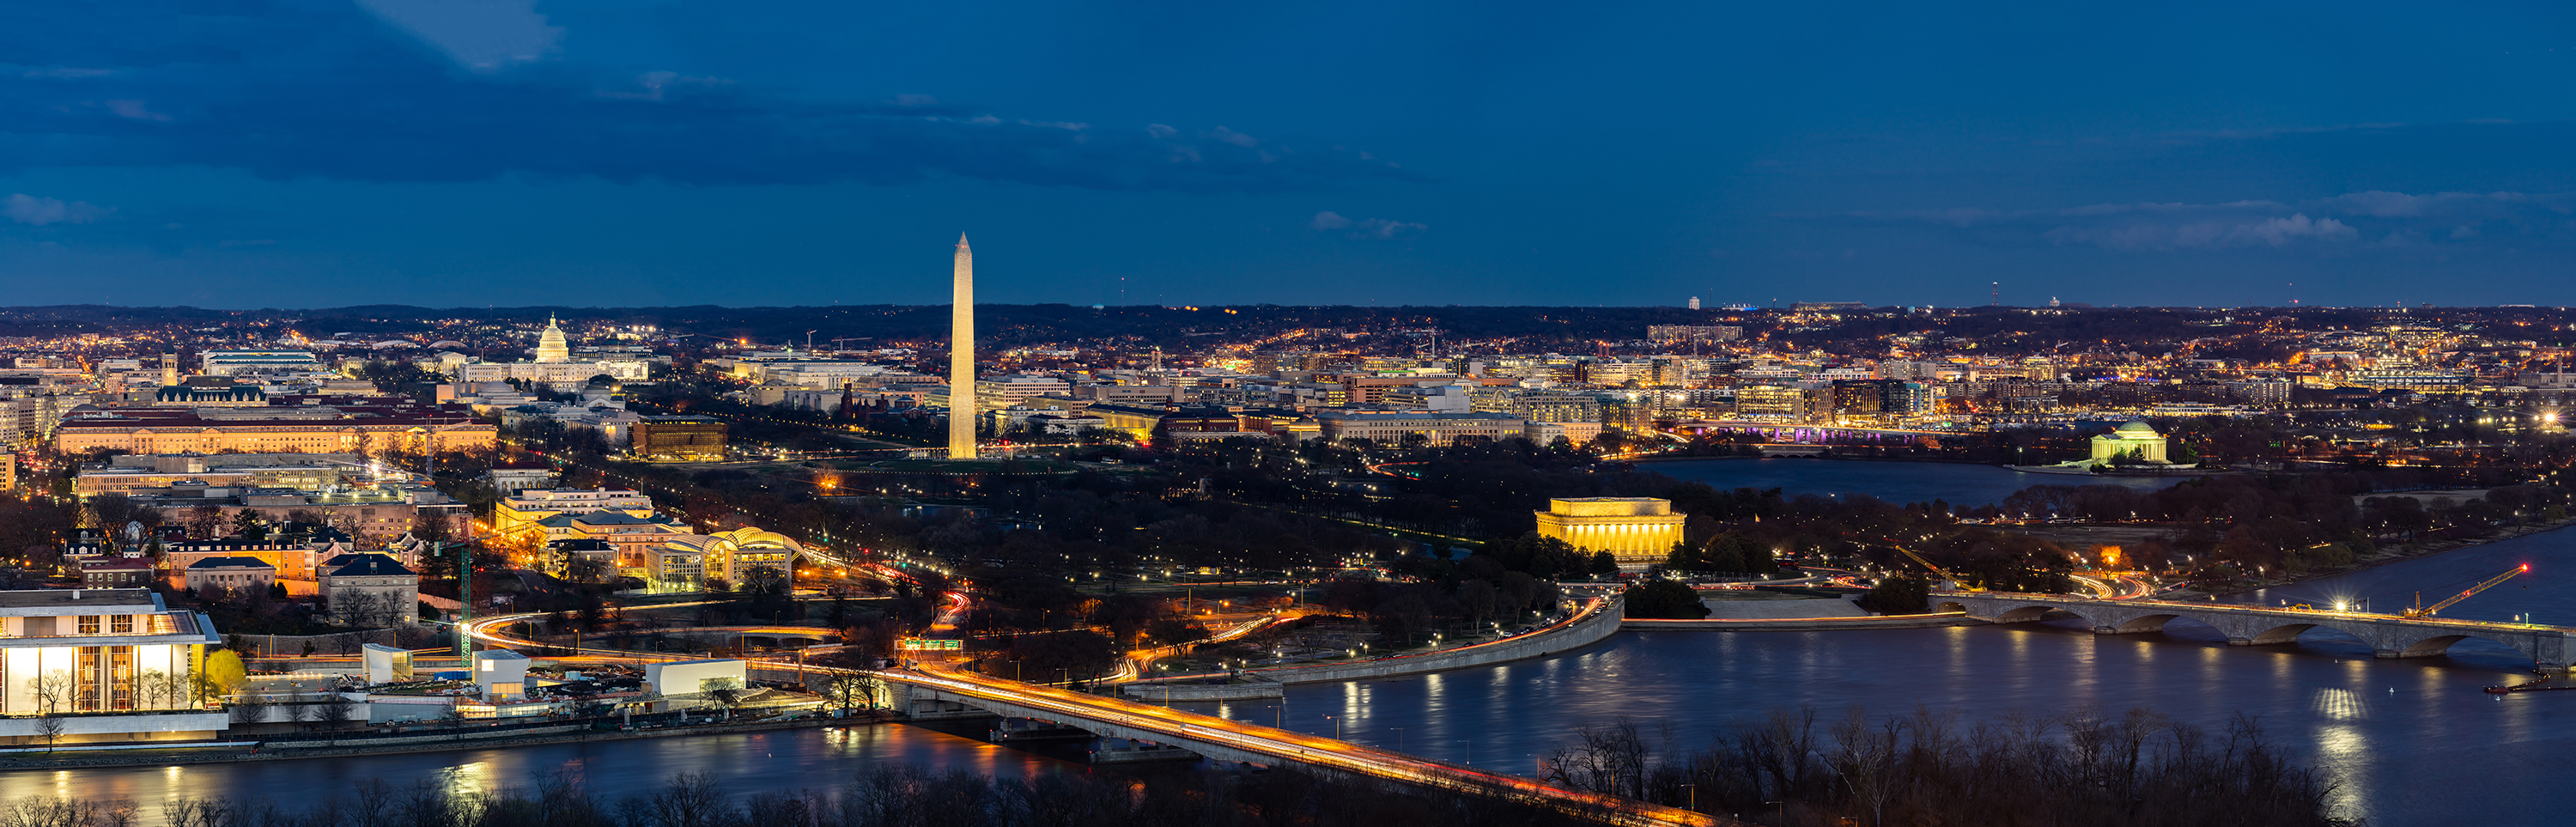 Washington DC skyline at night